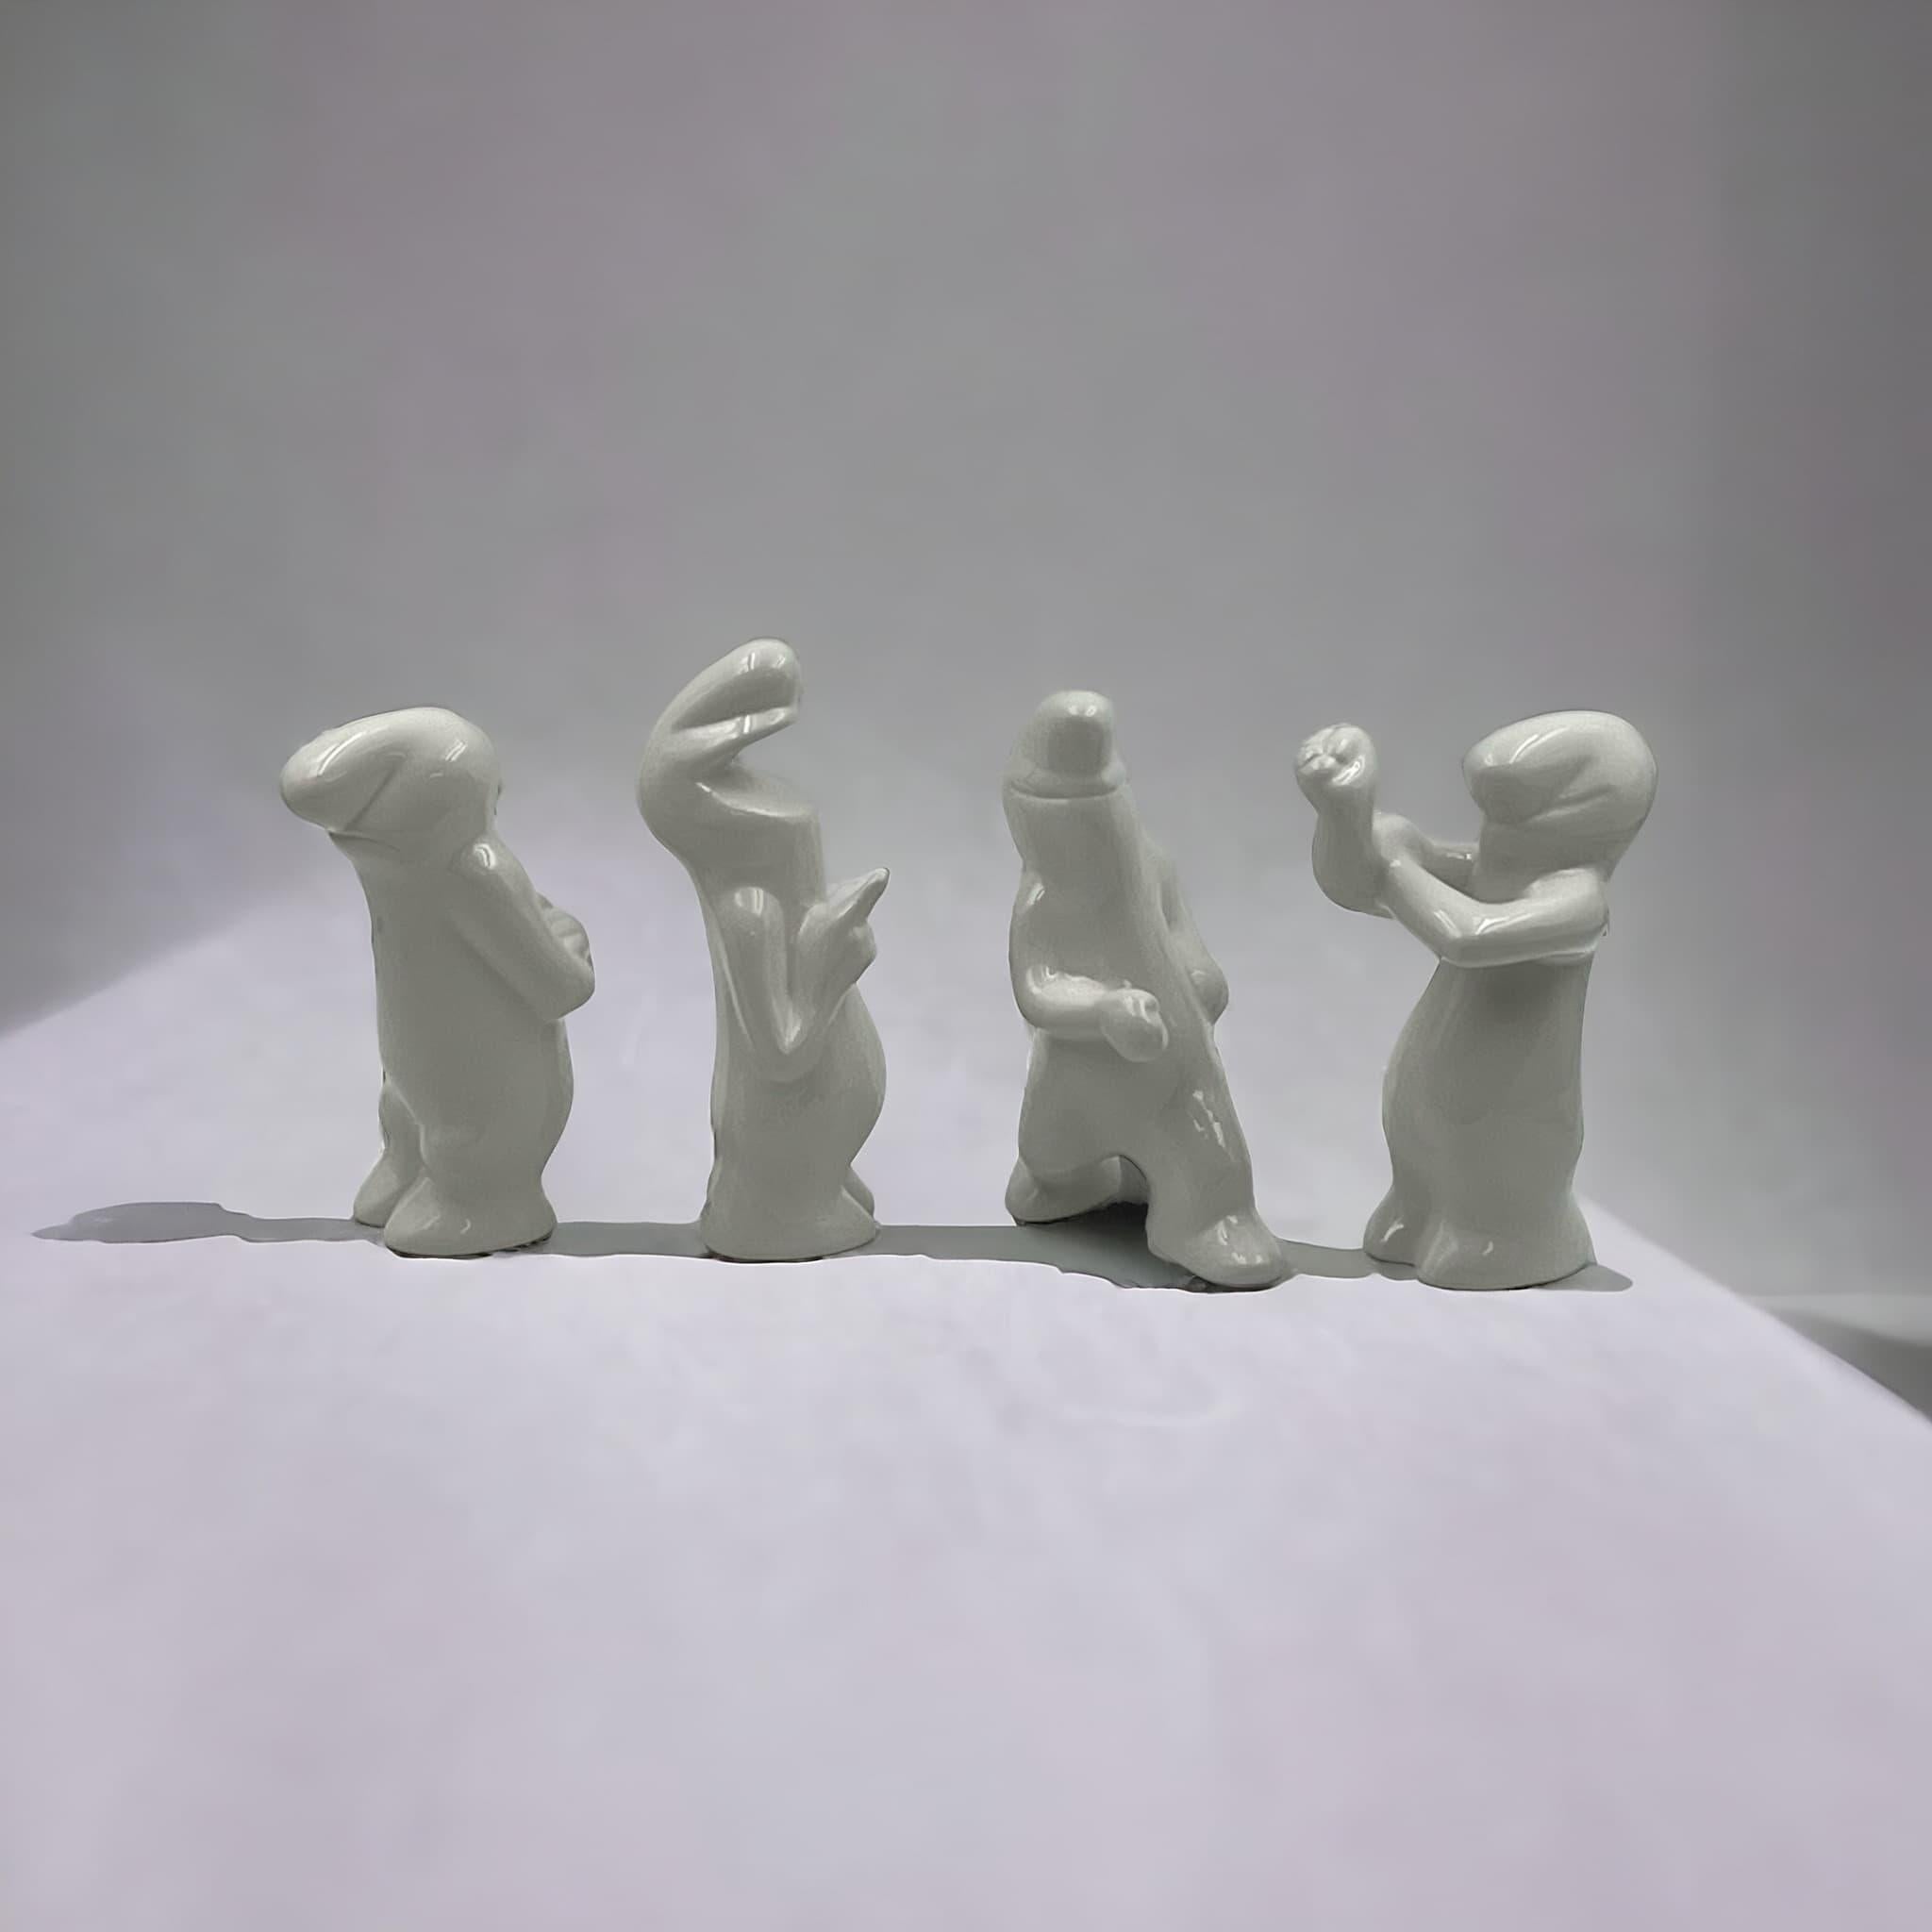 Osvaldo Cavandoli 'La Linea' - Pop Art 1960s - Set of Four Ceramic Figurines 2